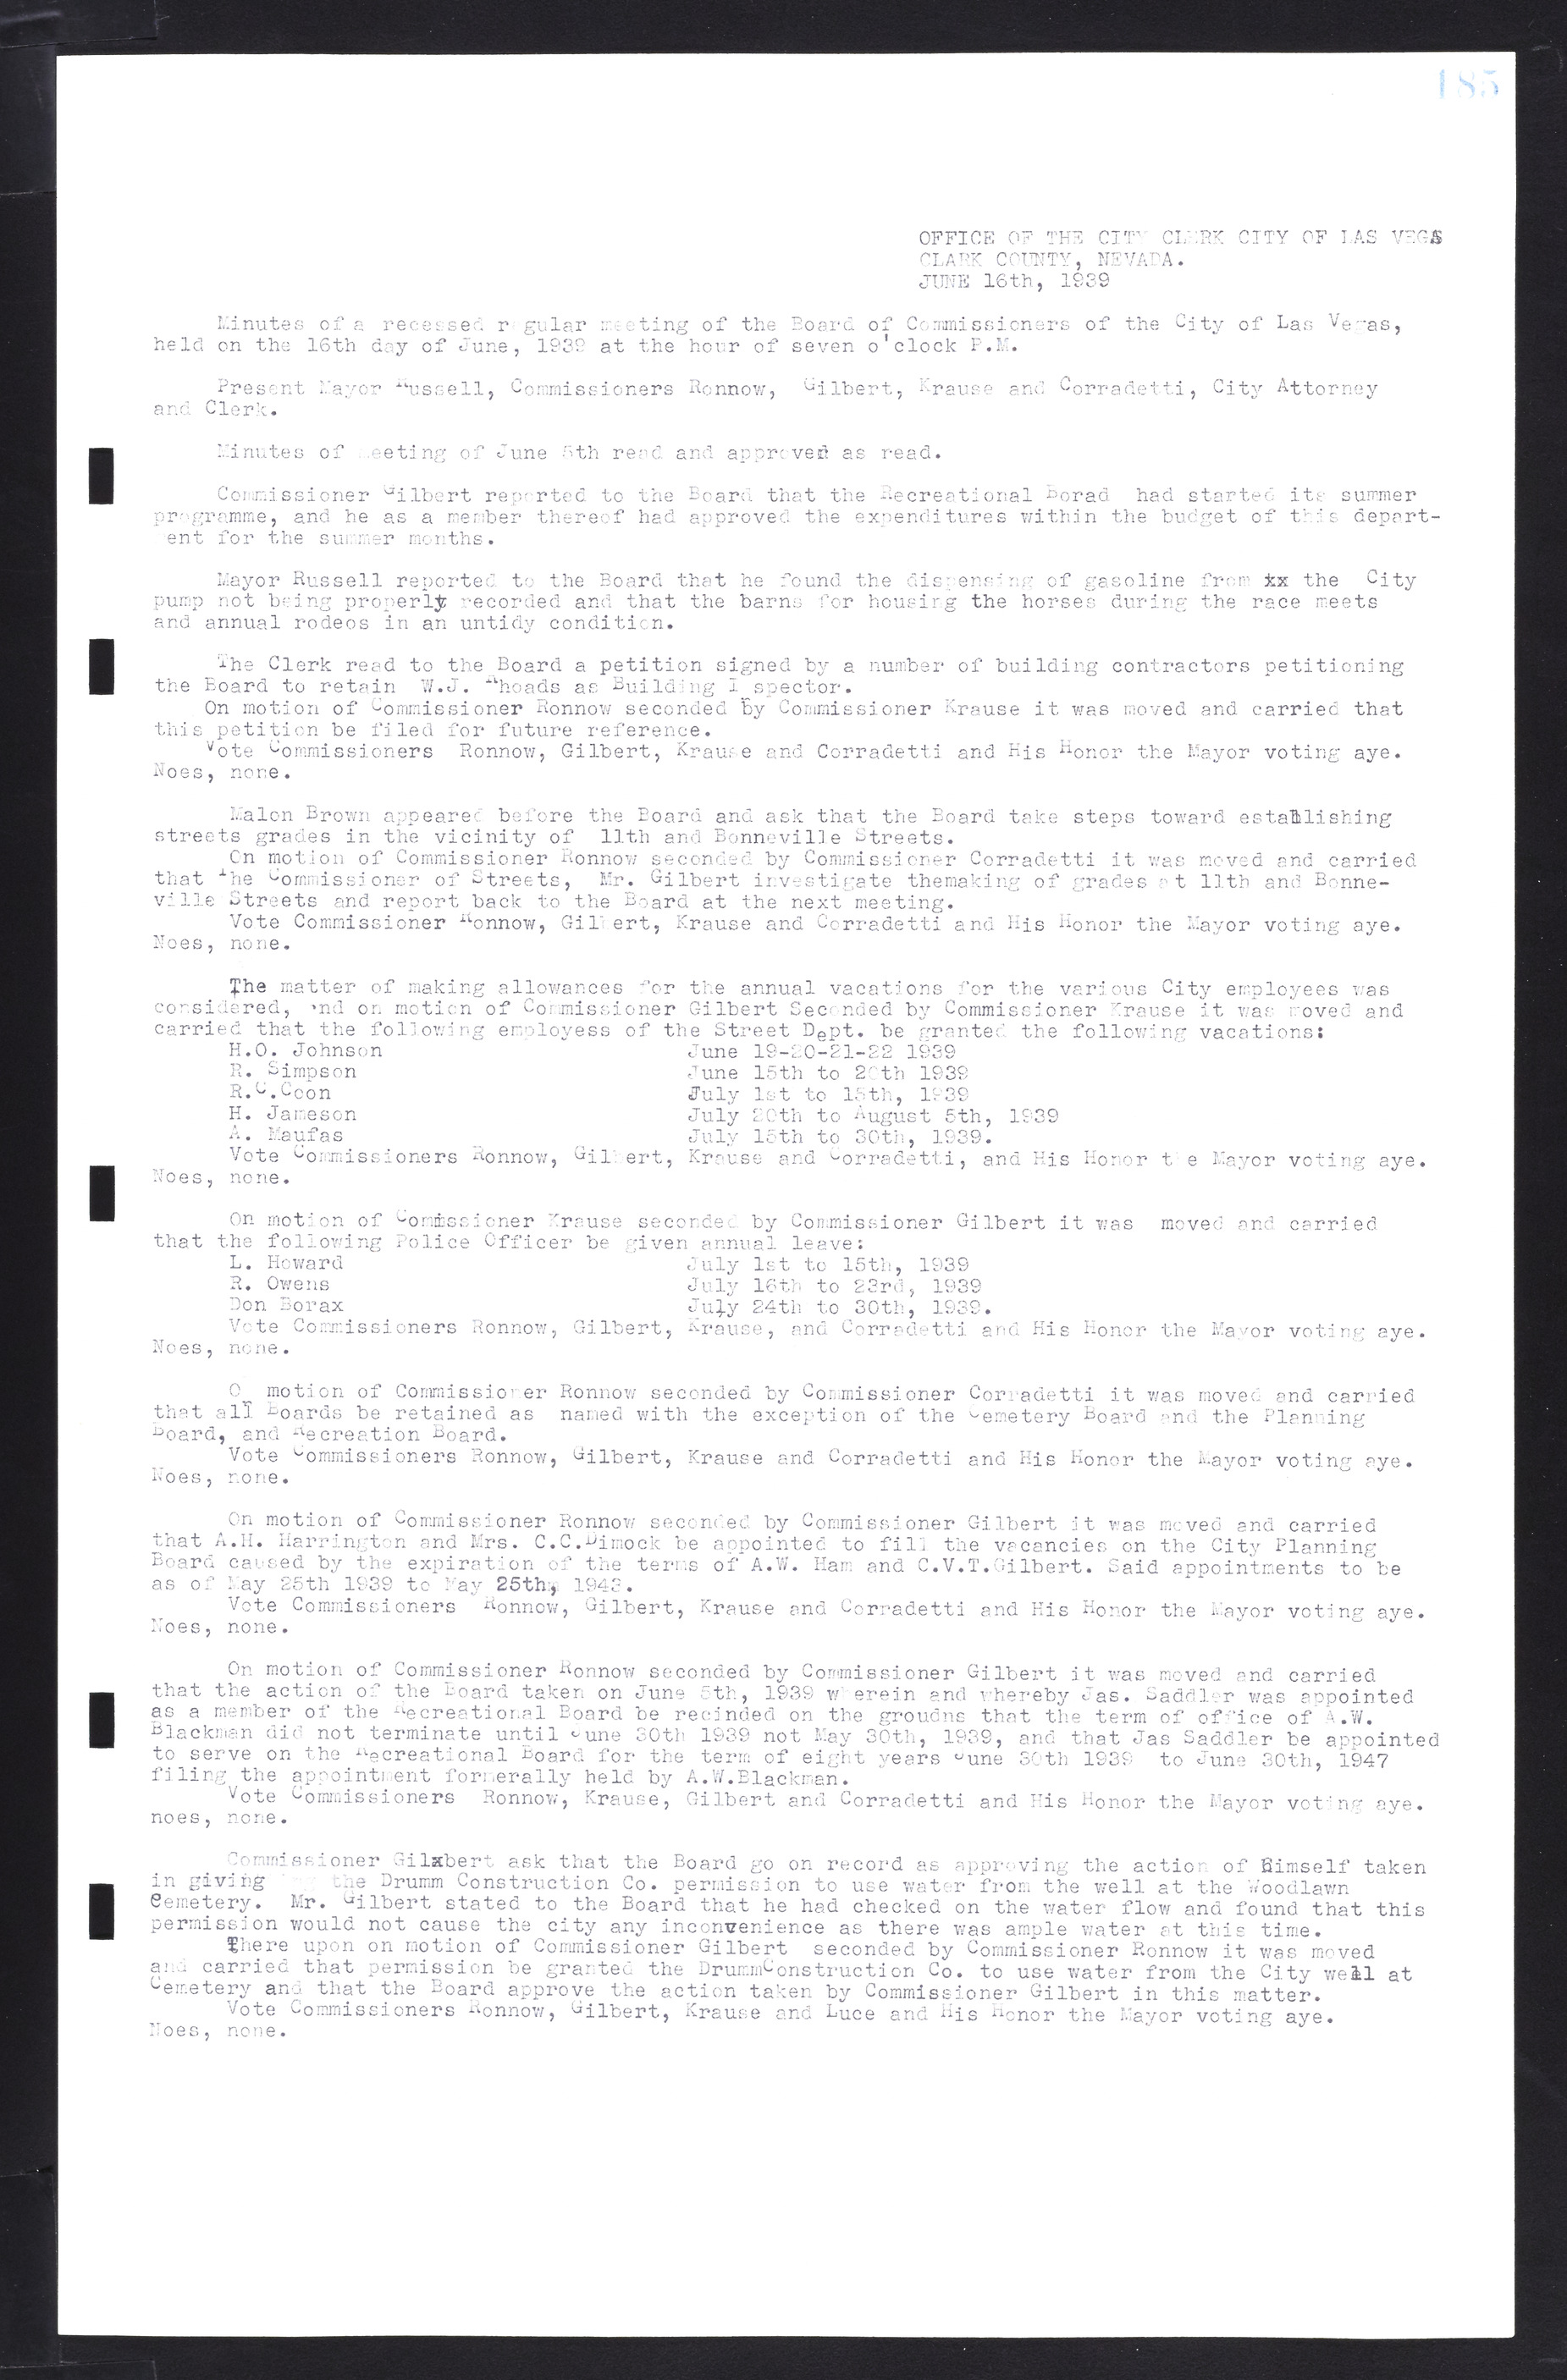 Las Vegas City Commission Minutes, February 17, 1937 to August 4, 1942, lvc000004-201